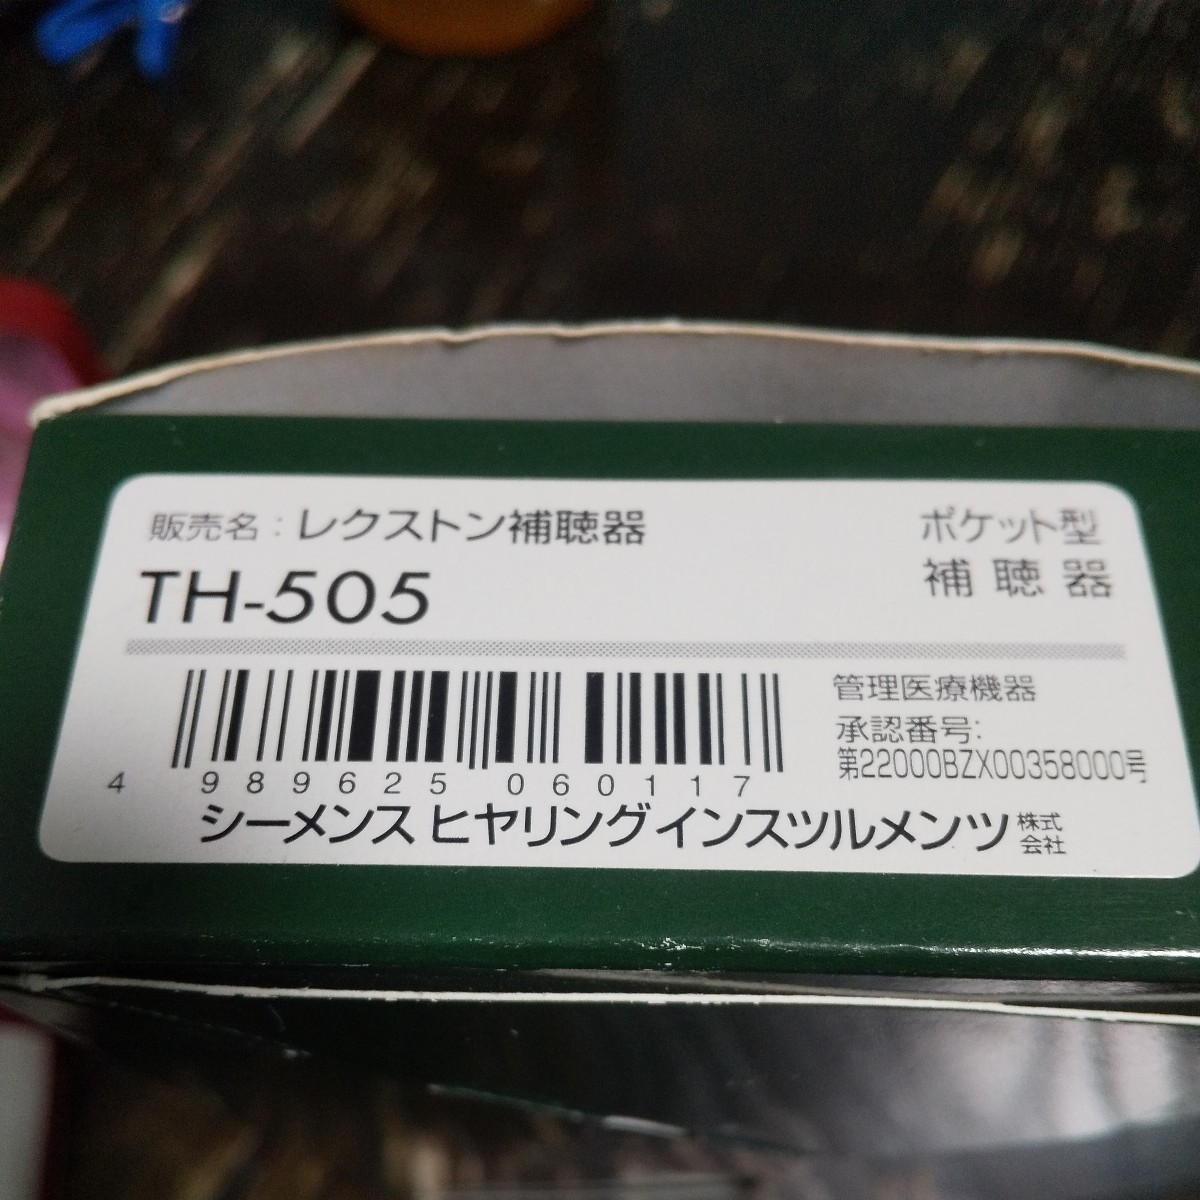  Rexton слуховой аппарат TH-505 обычная цена 39000 иен карман type слуховой аппарат Siemens hiya кольцо in stsuru men tsu( АО )